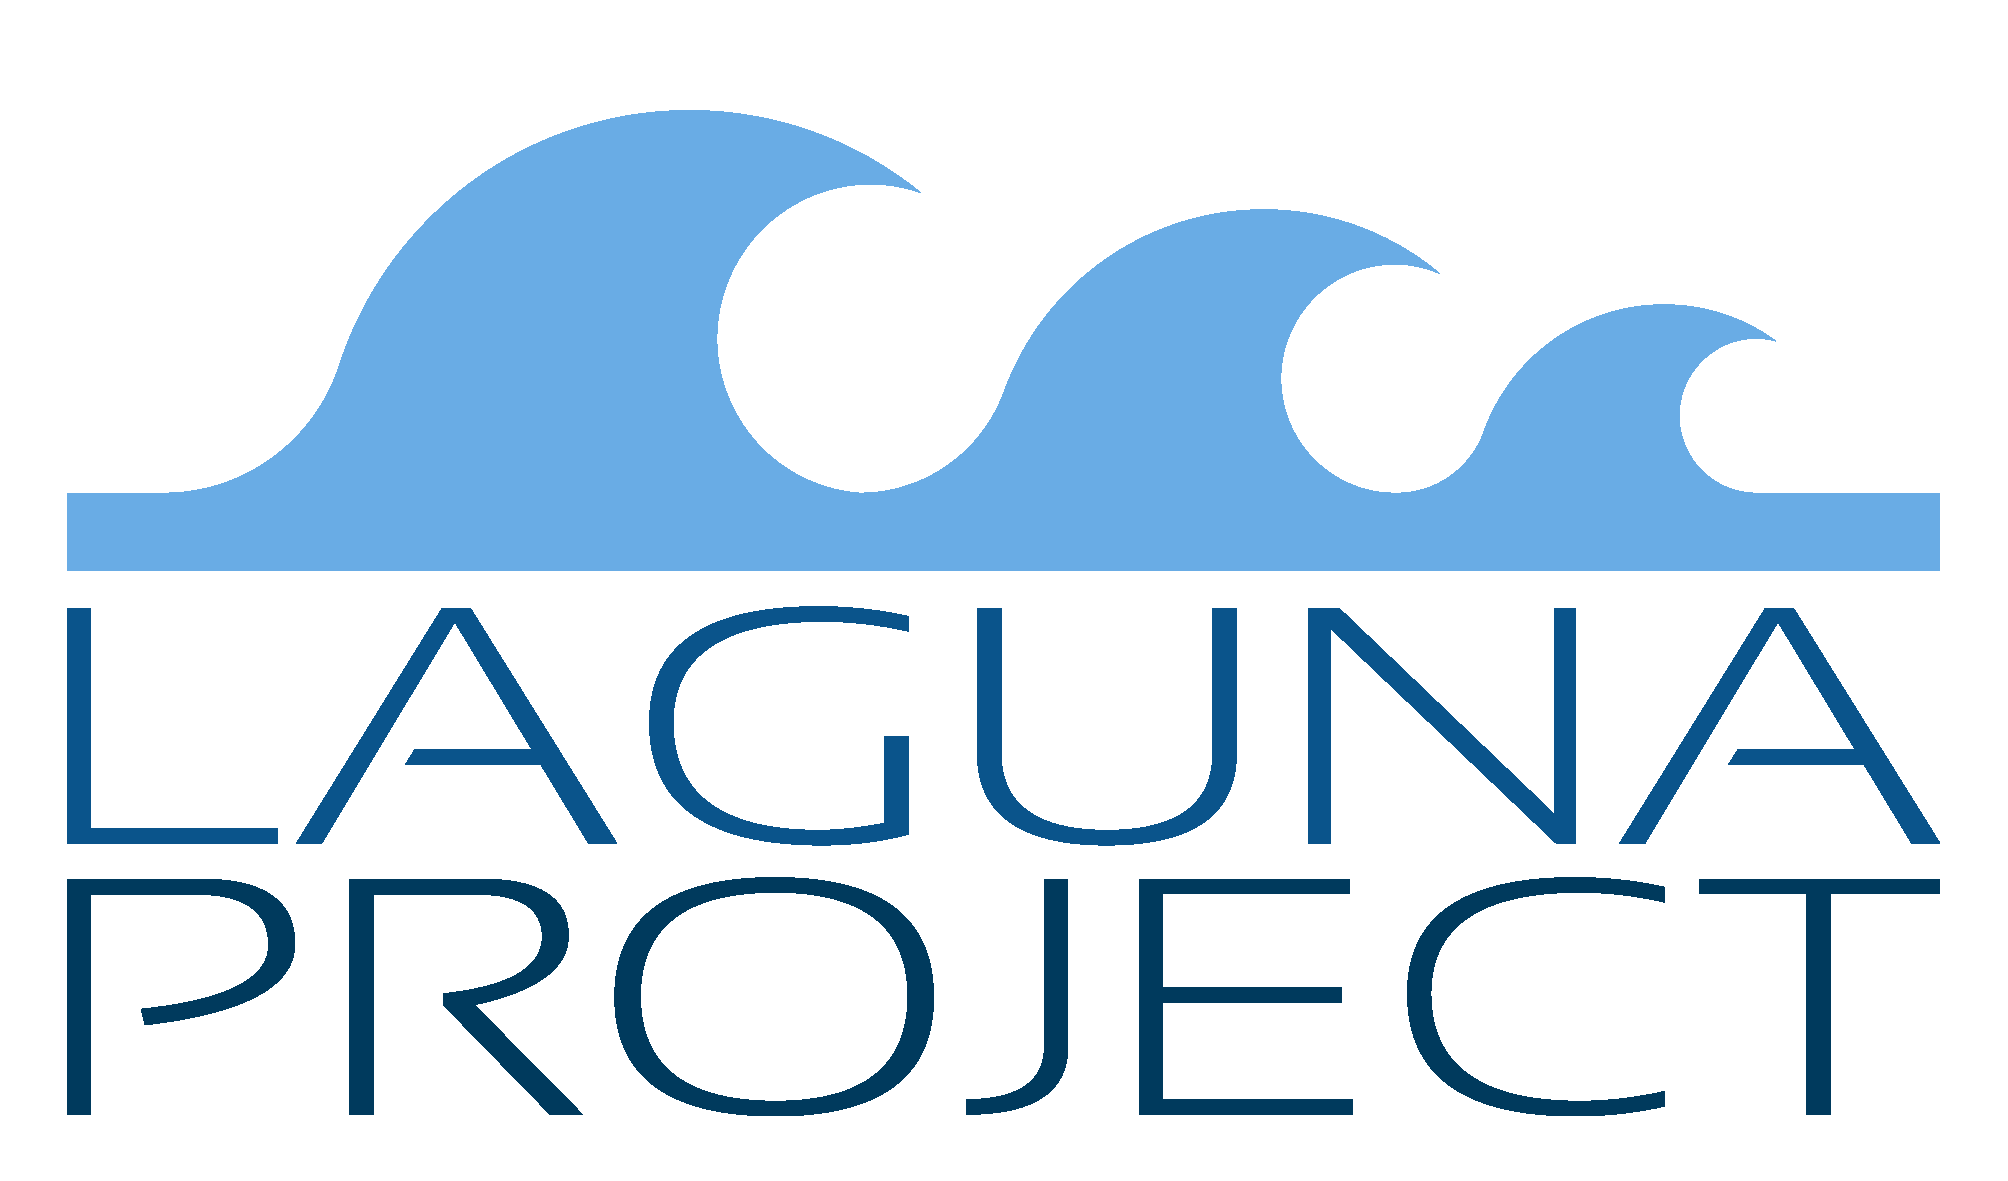 Laguna Project